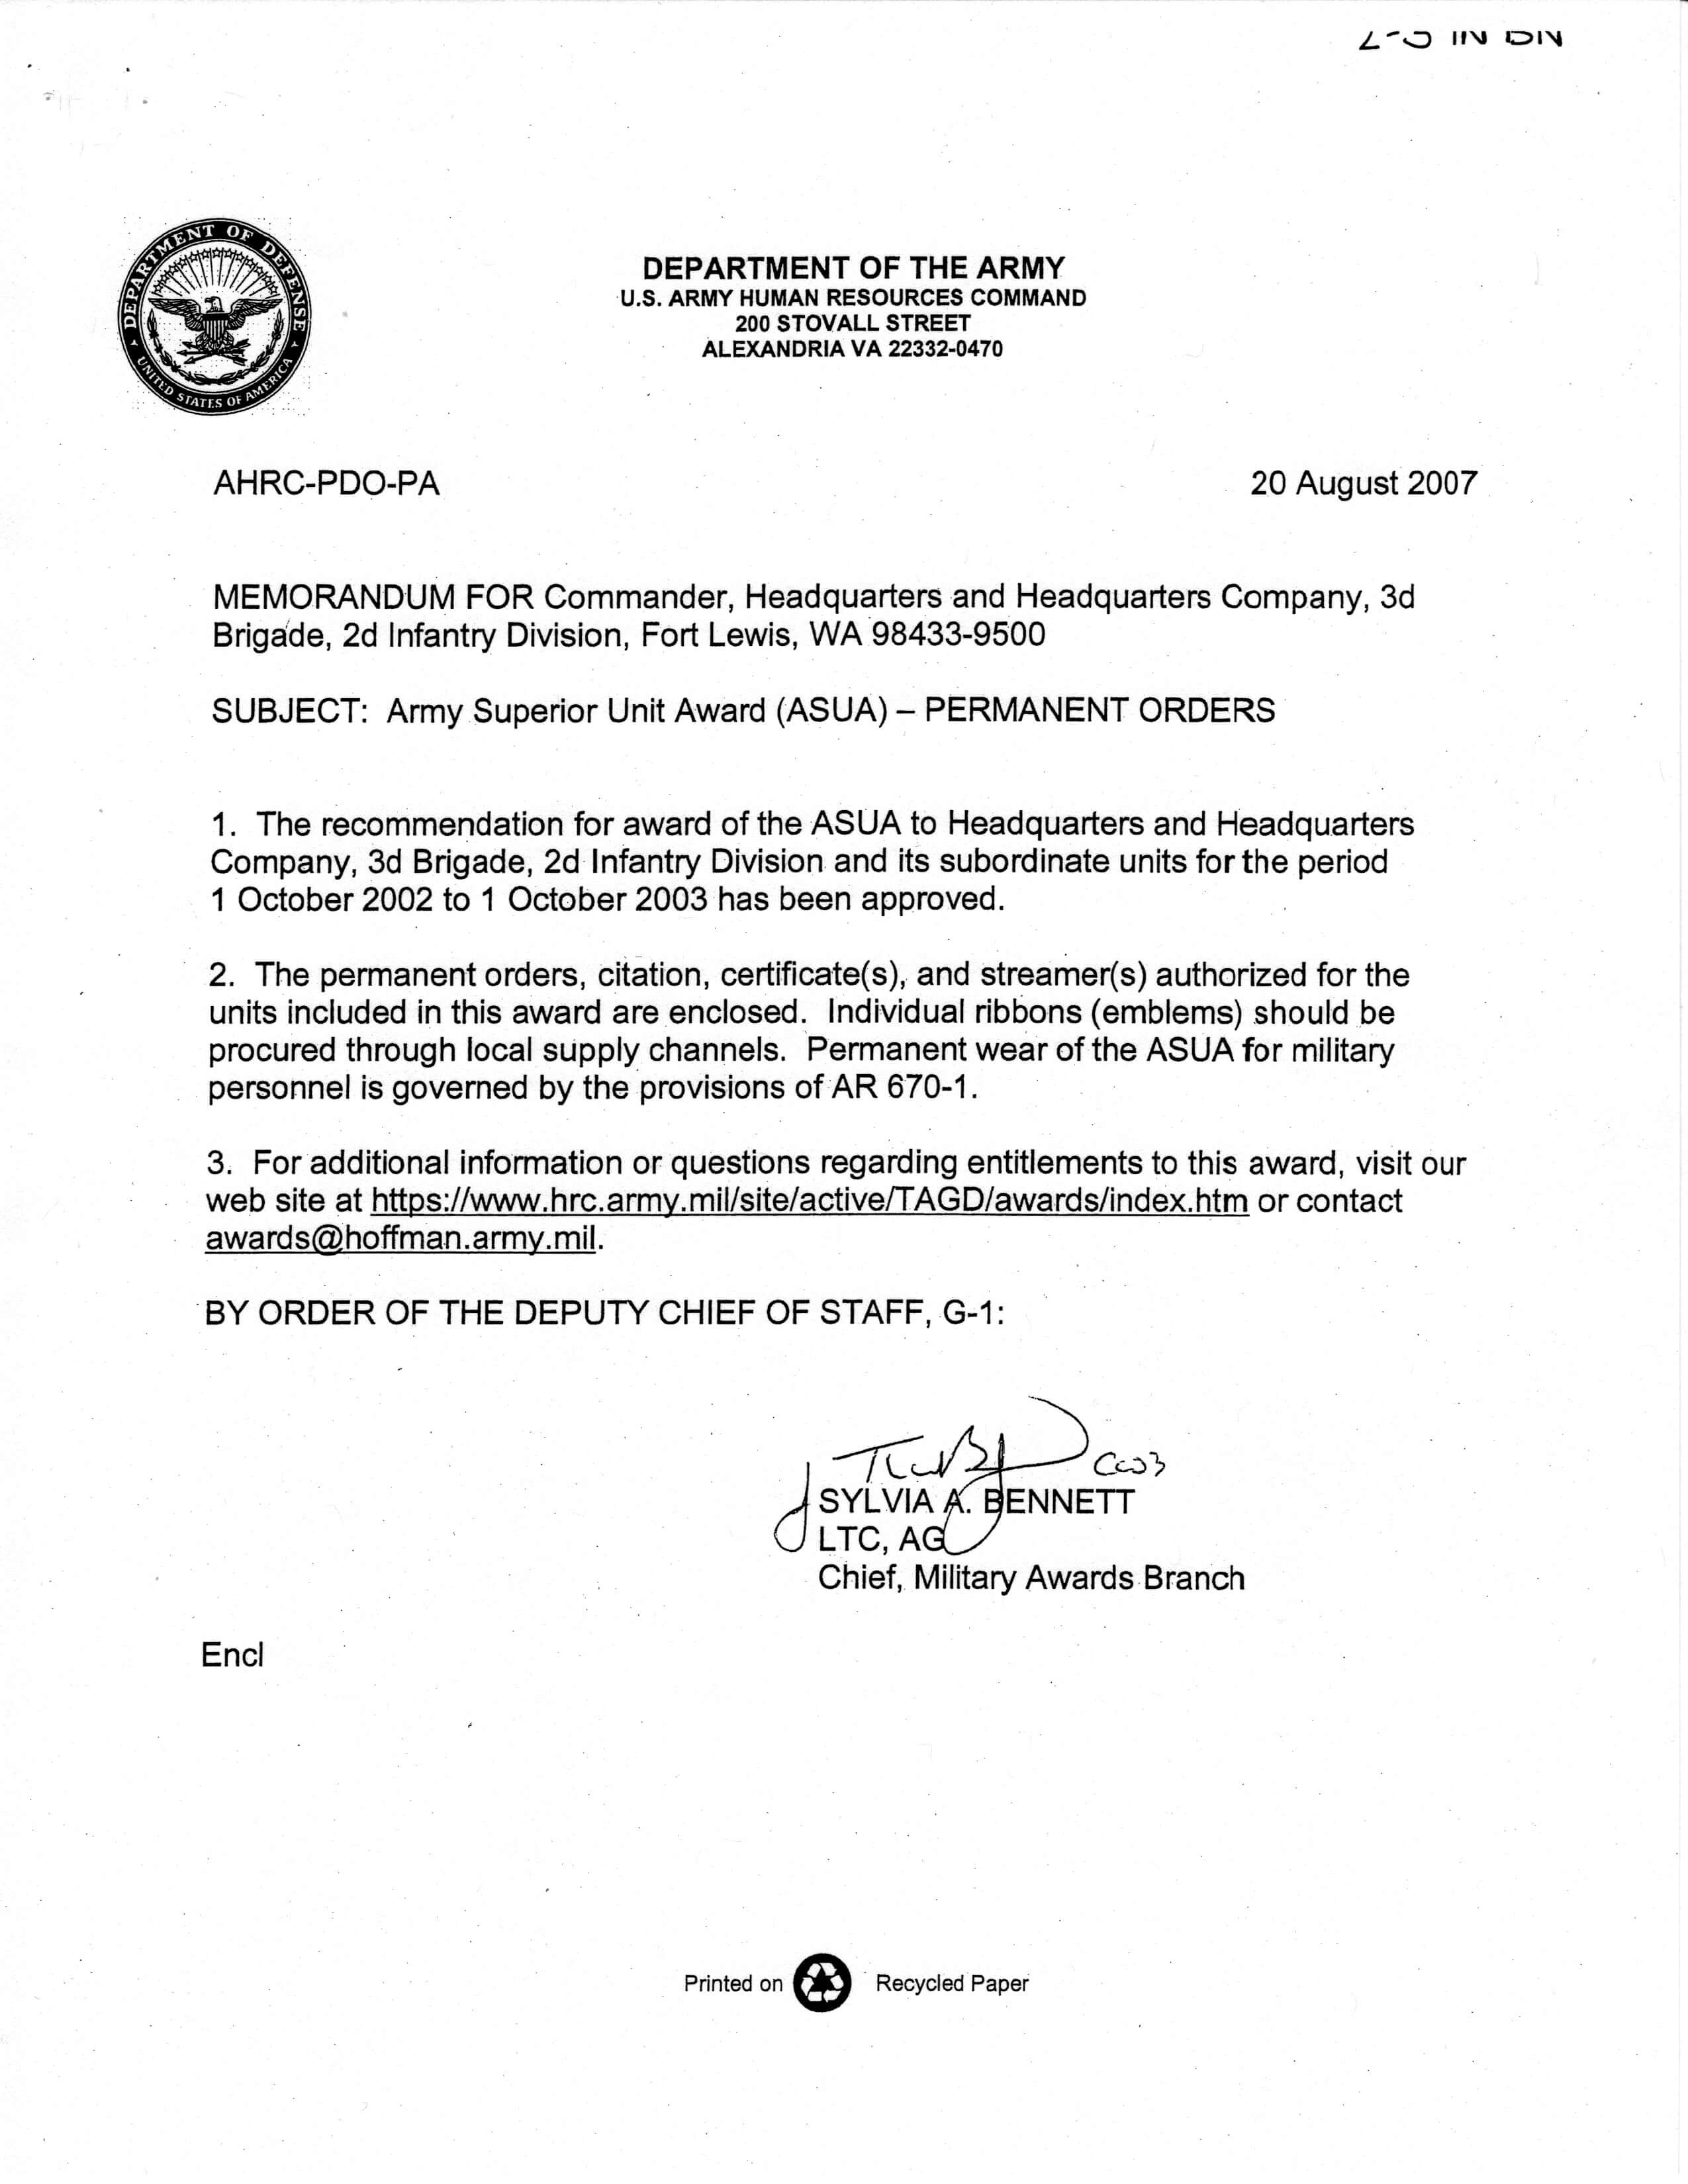 Department Of The Army Memorandum For Record Template How Regarding Army Memorandum Template Word